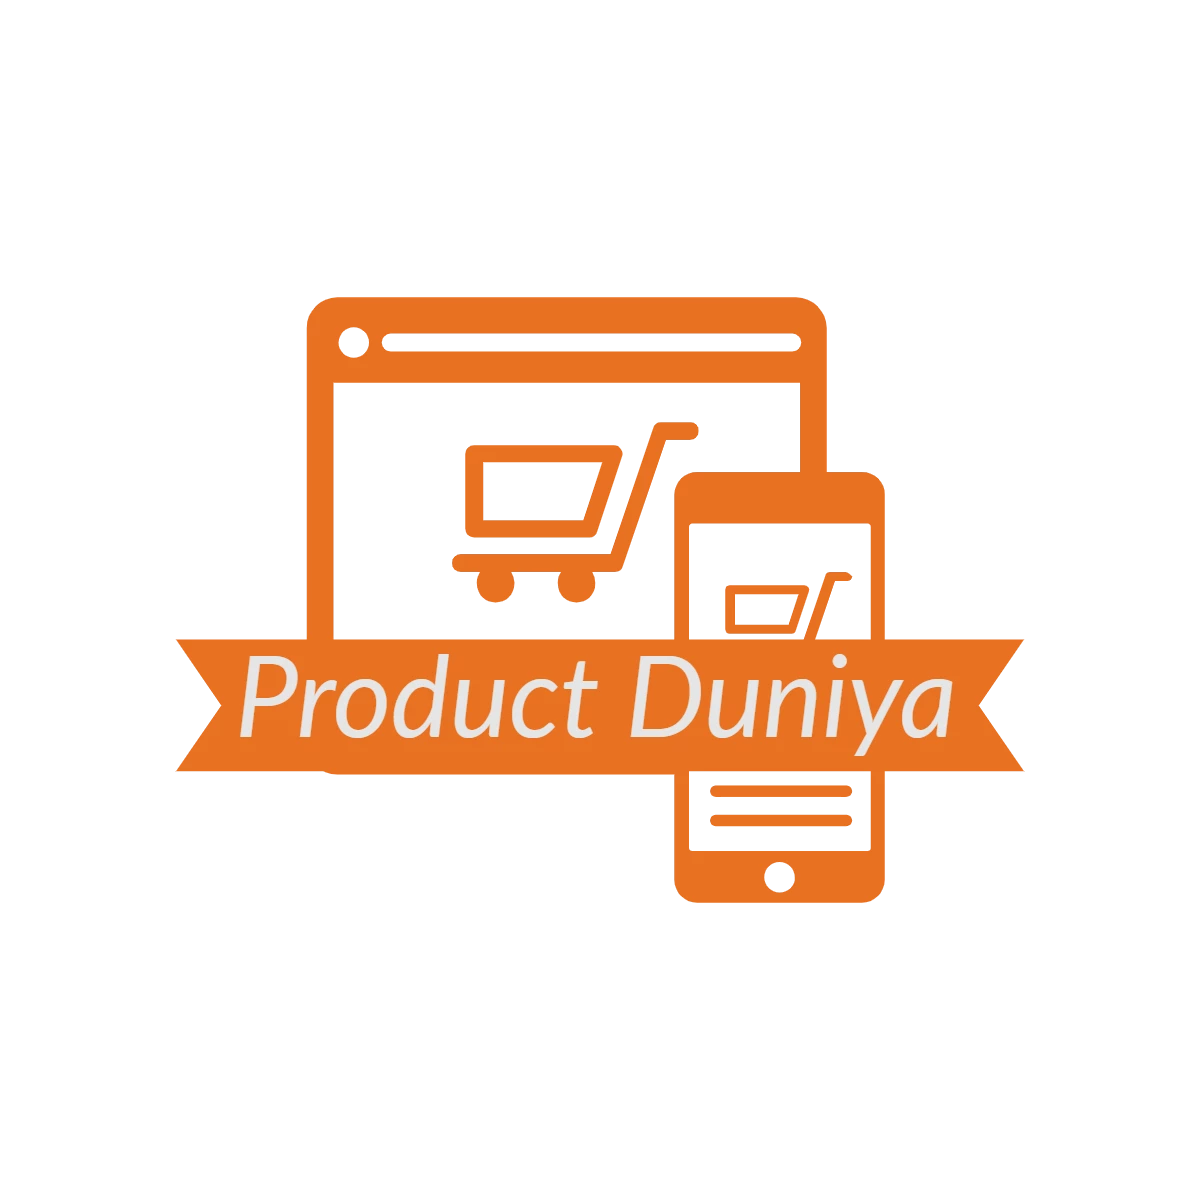 Product Duniya